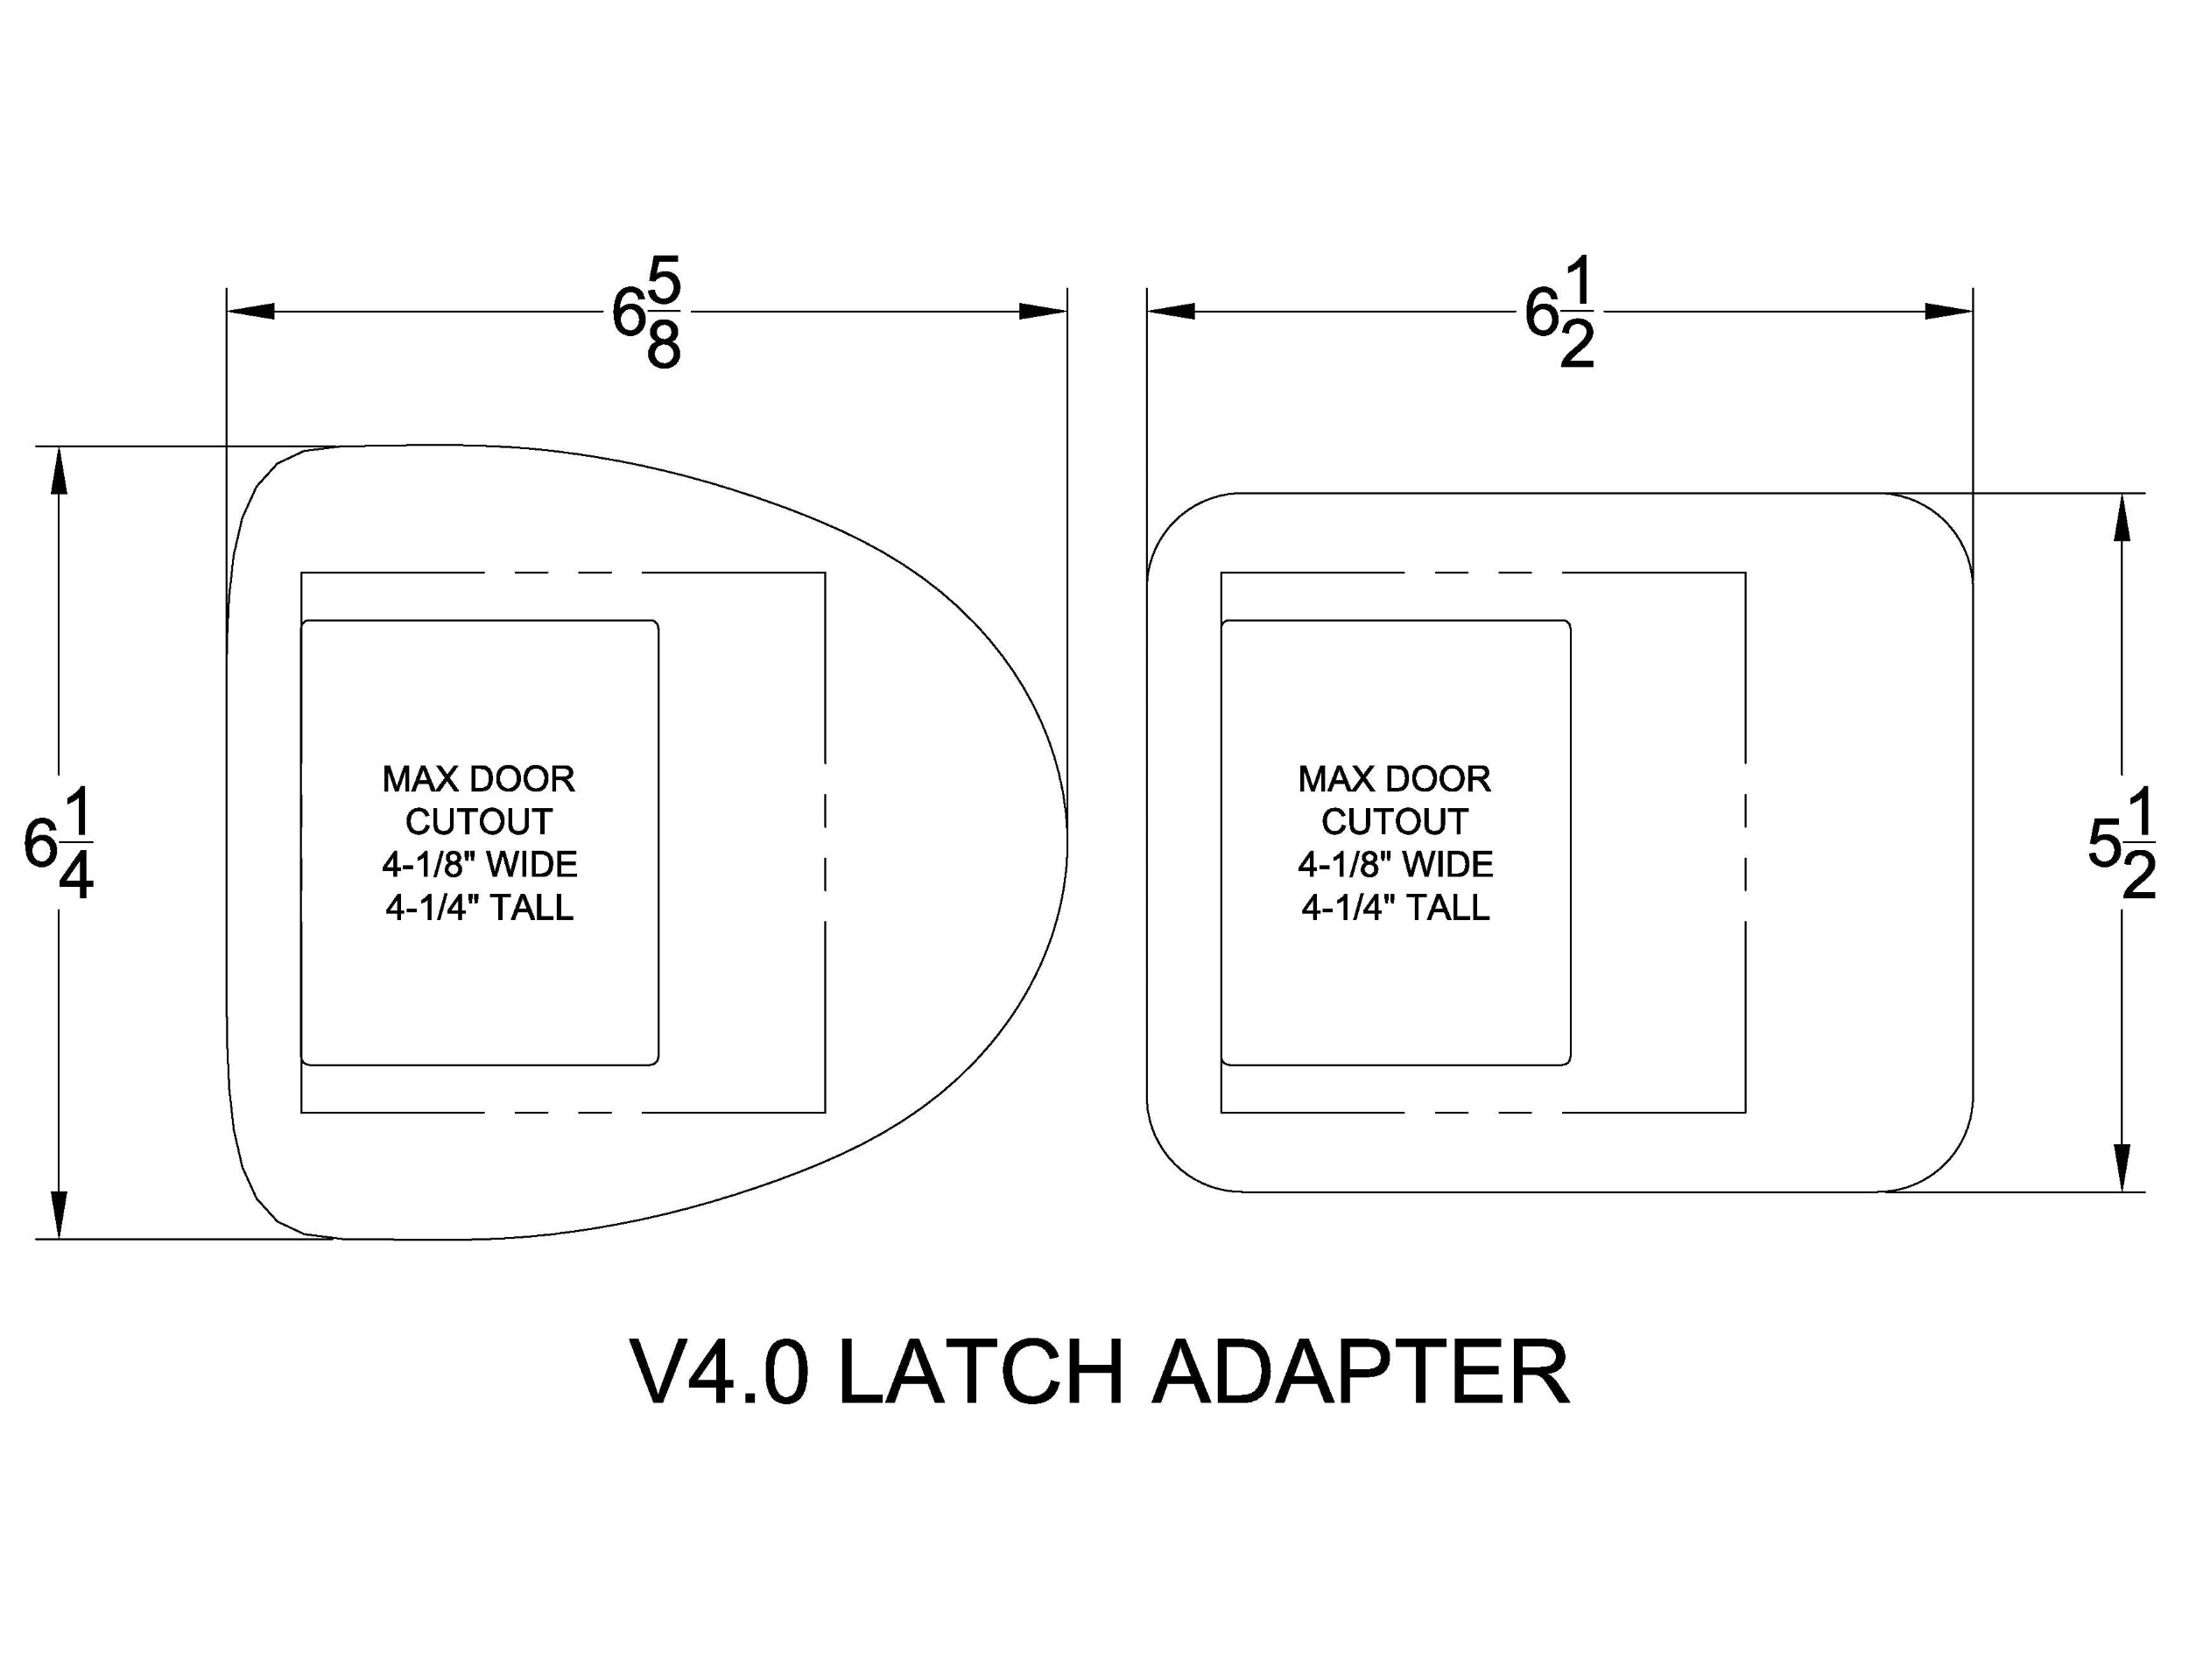 RVLock V4.0 Latch Adapter Dimensions